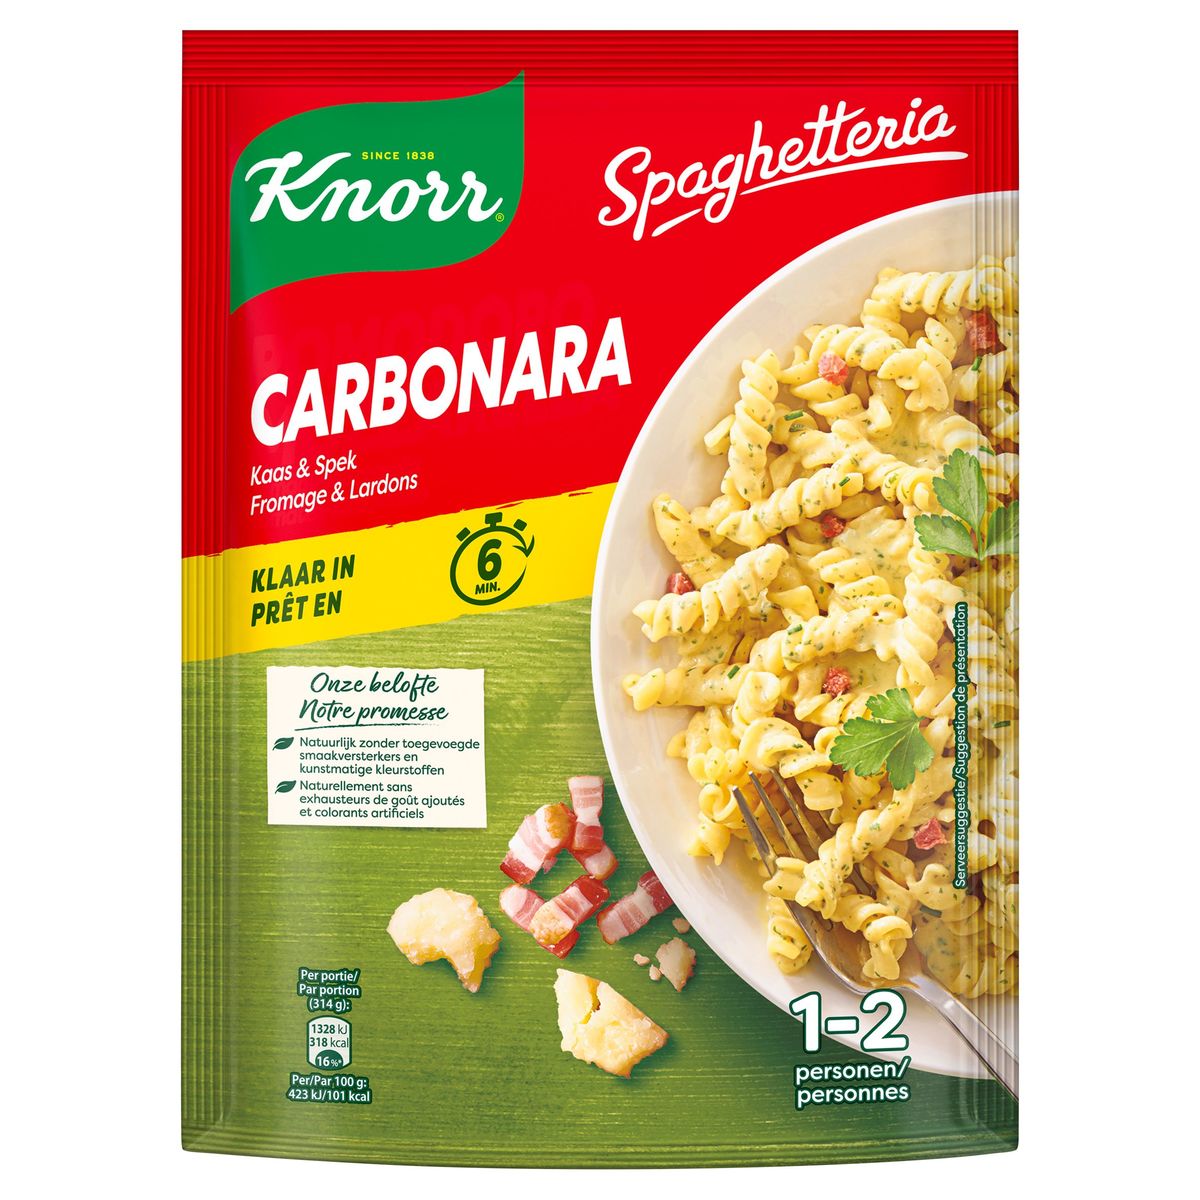 Knorr Spaghetteria Carbonara 154 g